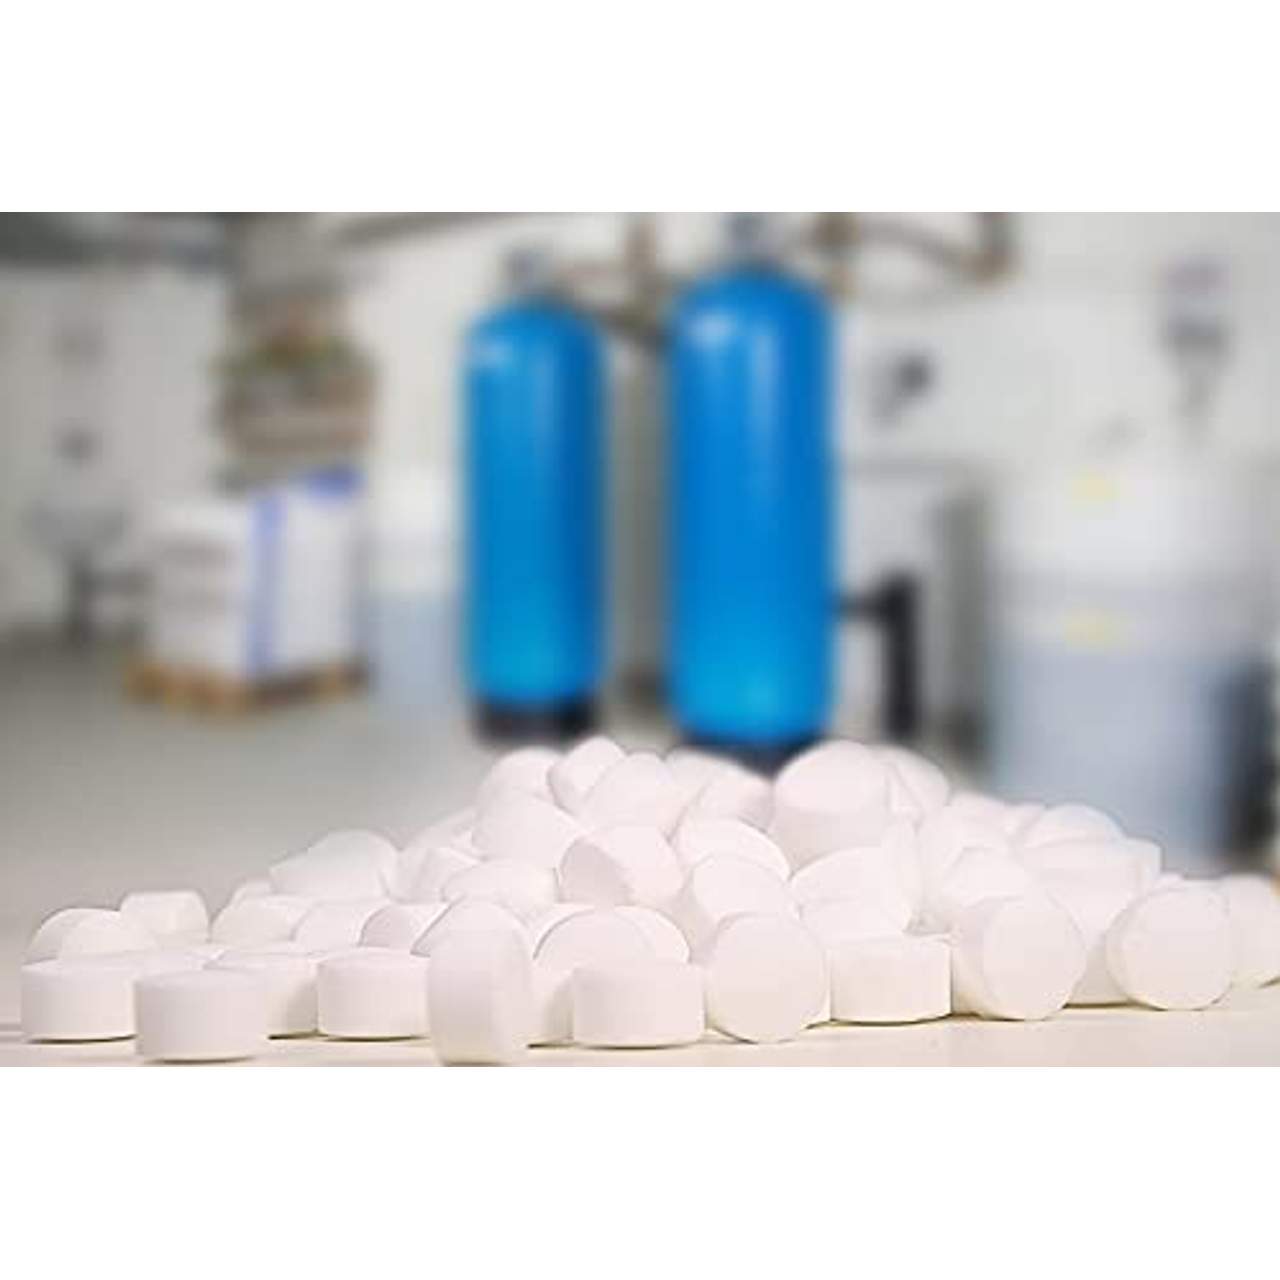 Grünbeck Regeneriersalz in Tablettenform 25kg